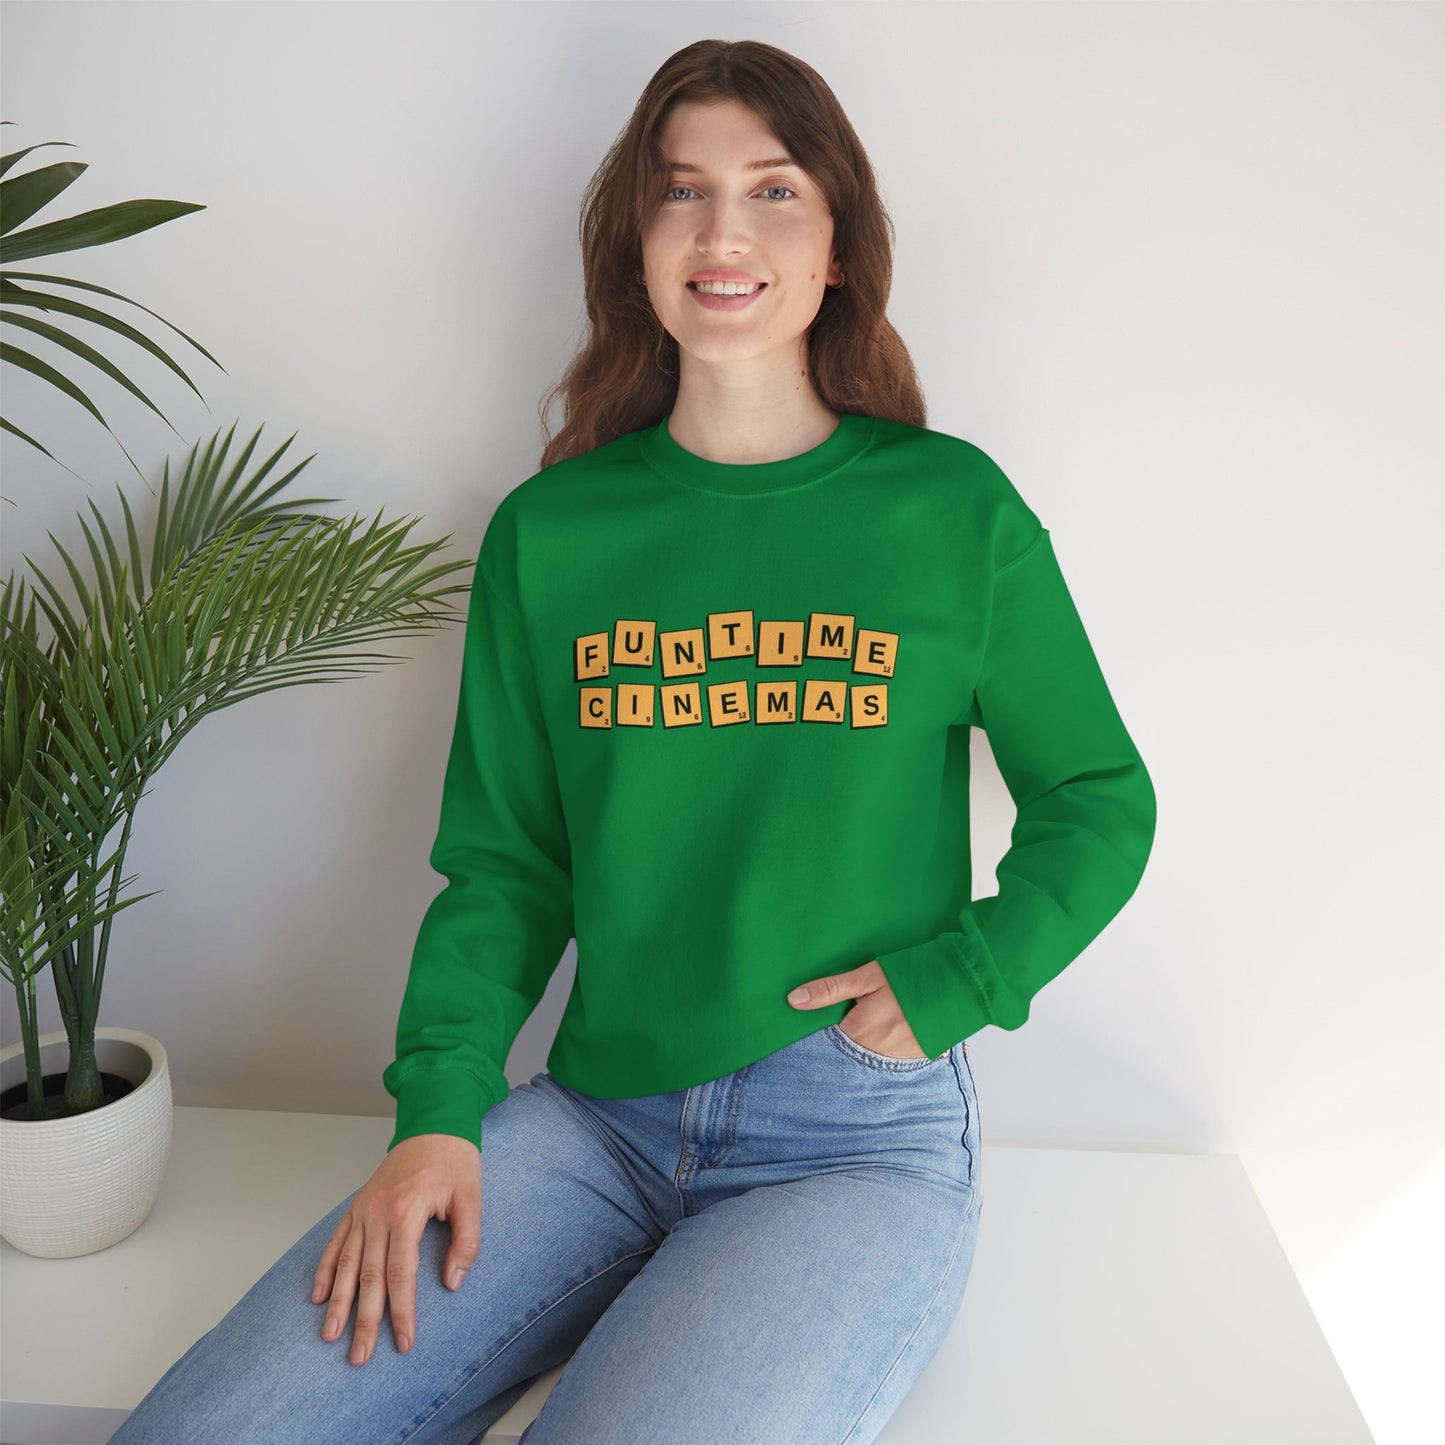 Funtime Scrabble Sweatshirt